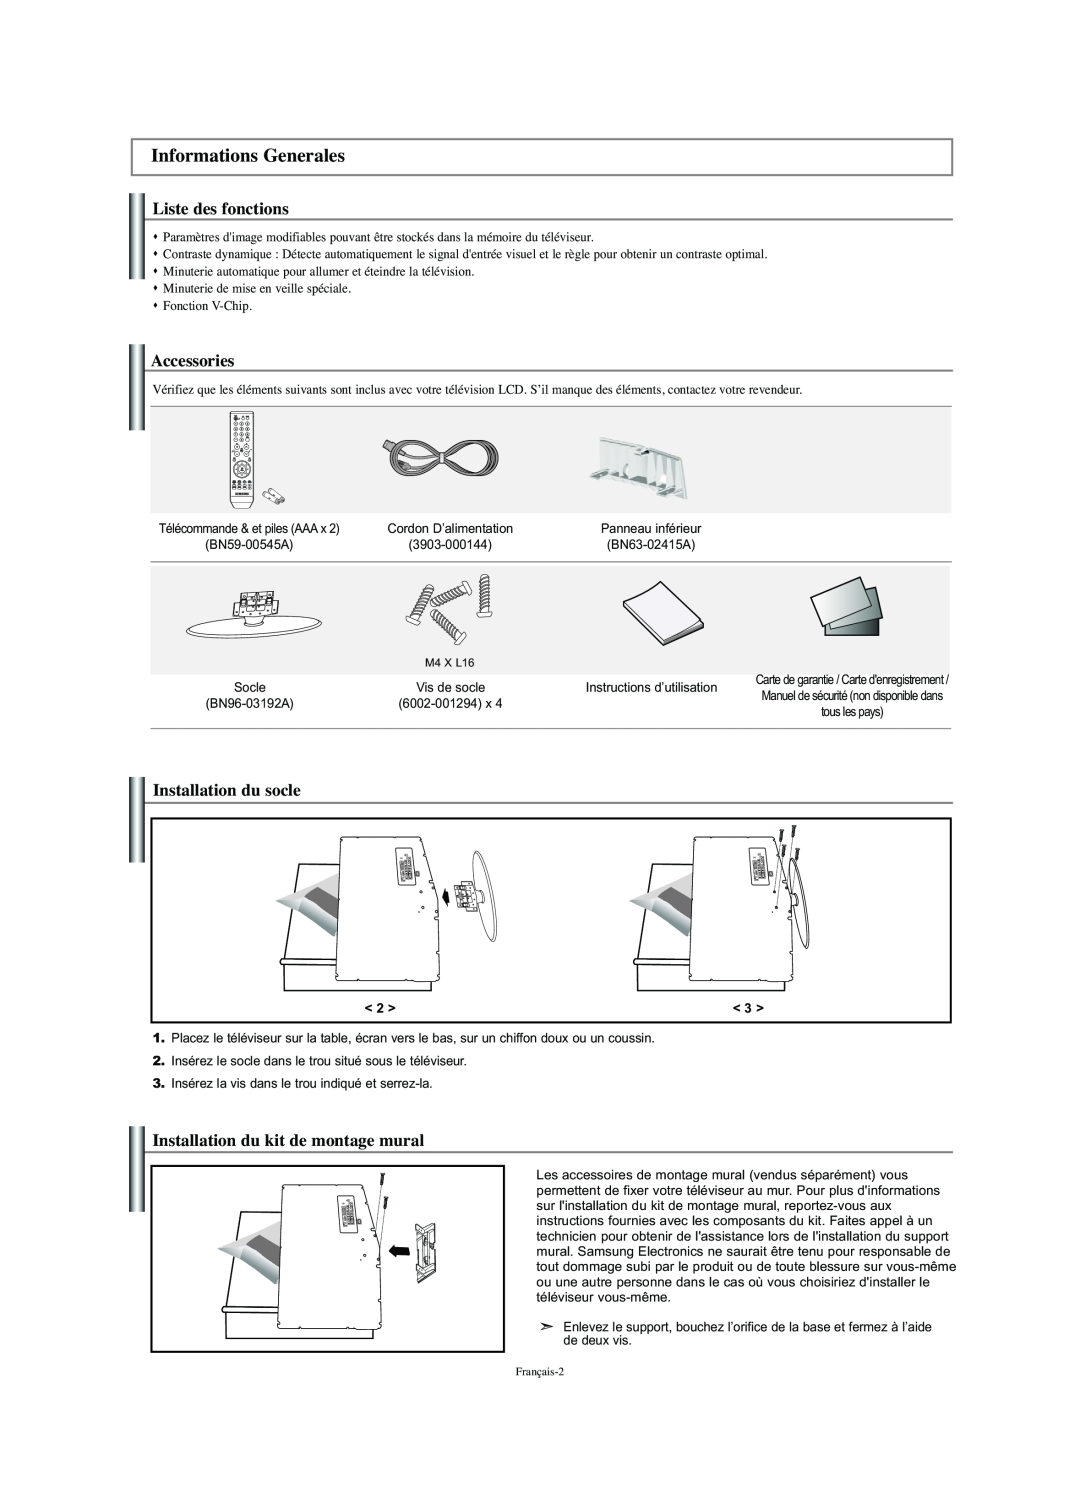 Samsung LN-S2341W Informations Generales, Liste des fonctions, Installation du socle, Installation du kit de montage mural 